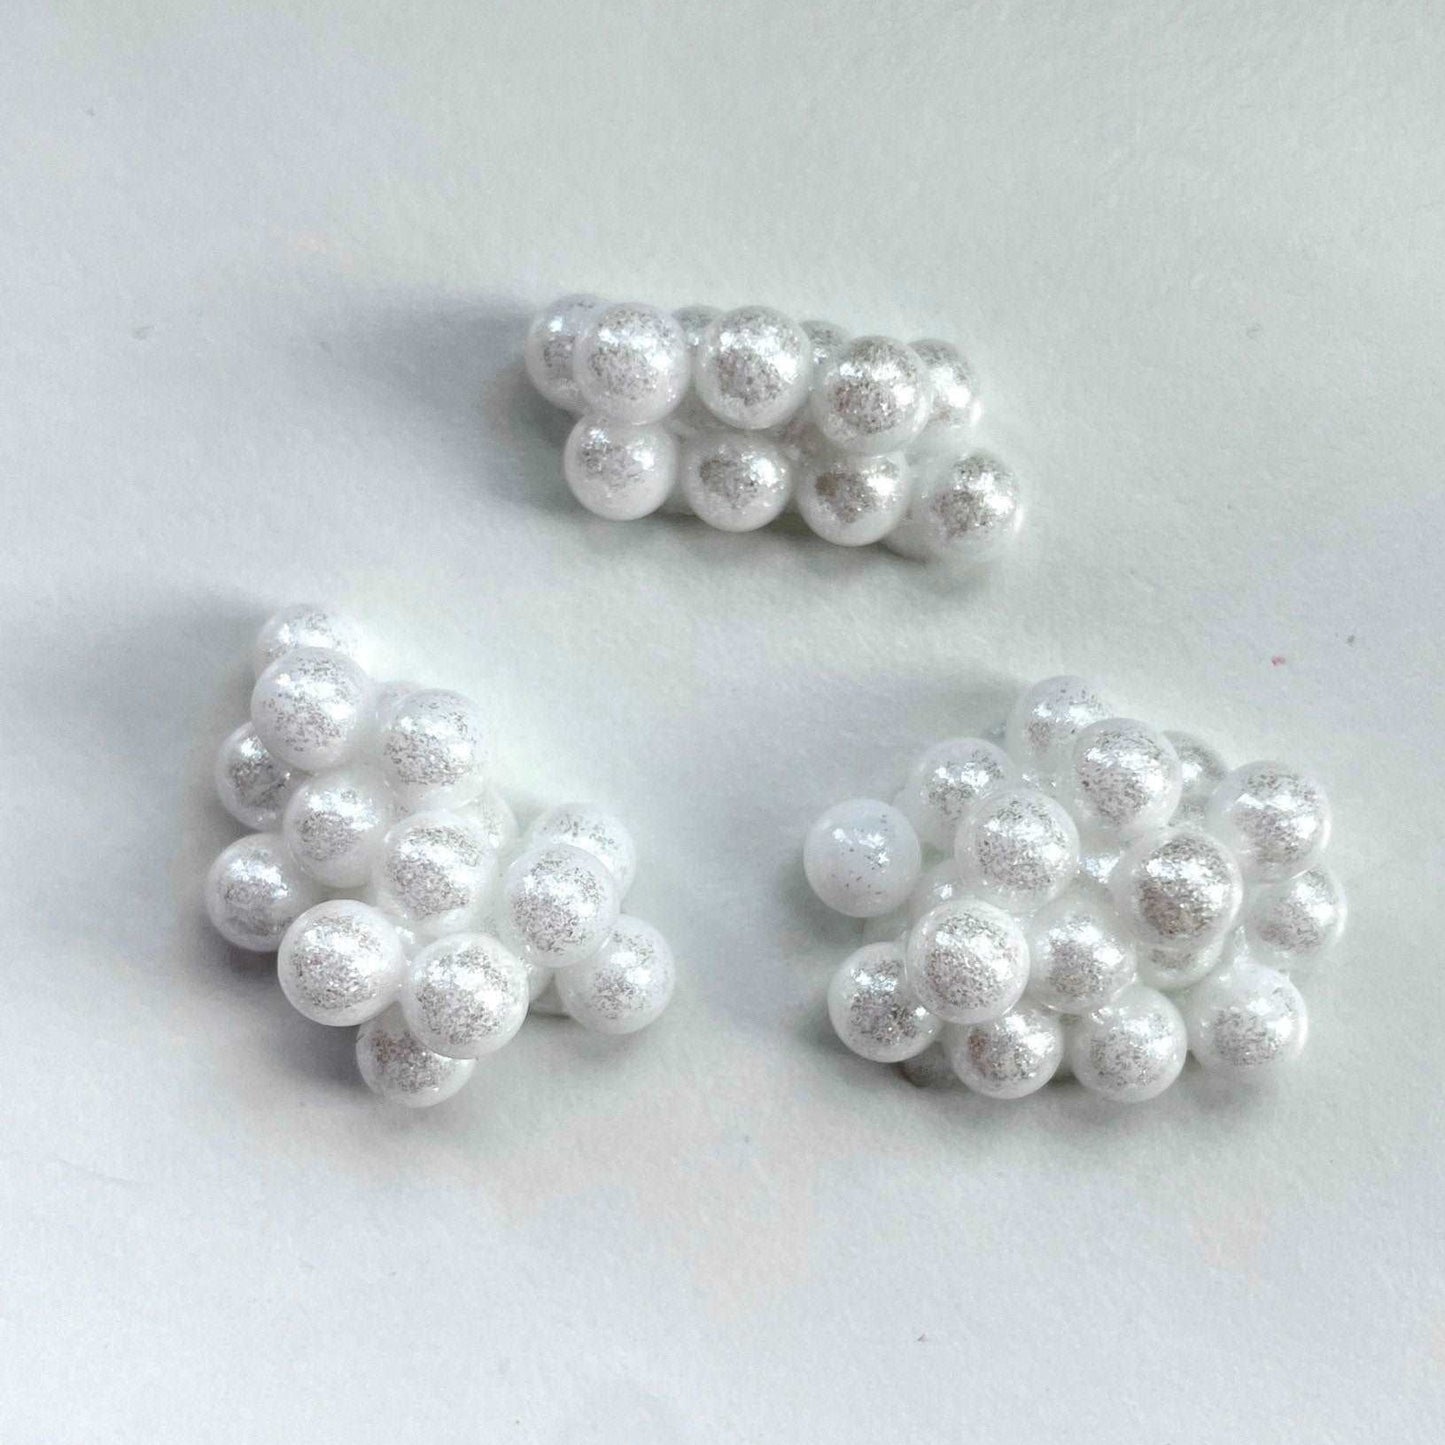 3 Little Jewelry Unique Bubbles Silicone mold. Abstract epoxy mold bubble mould silicone resin art bubble stone molding